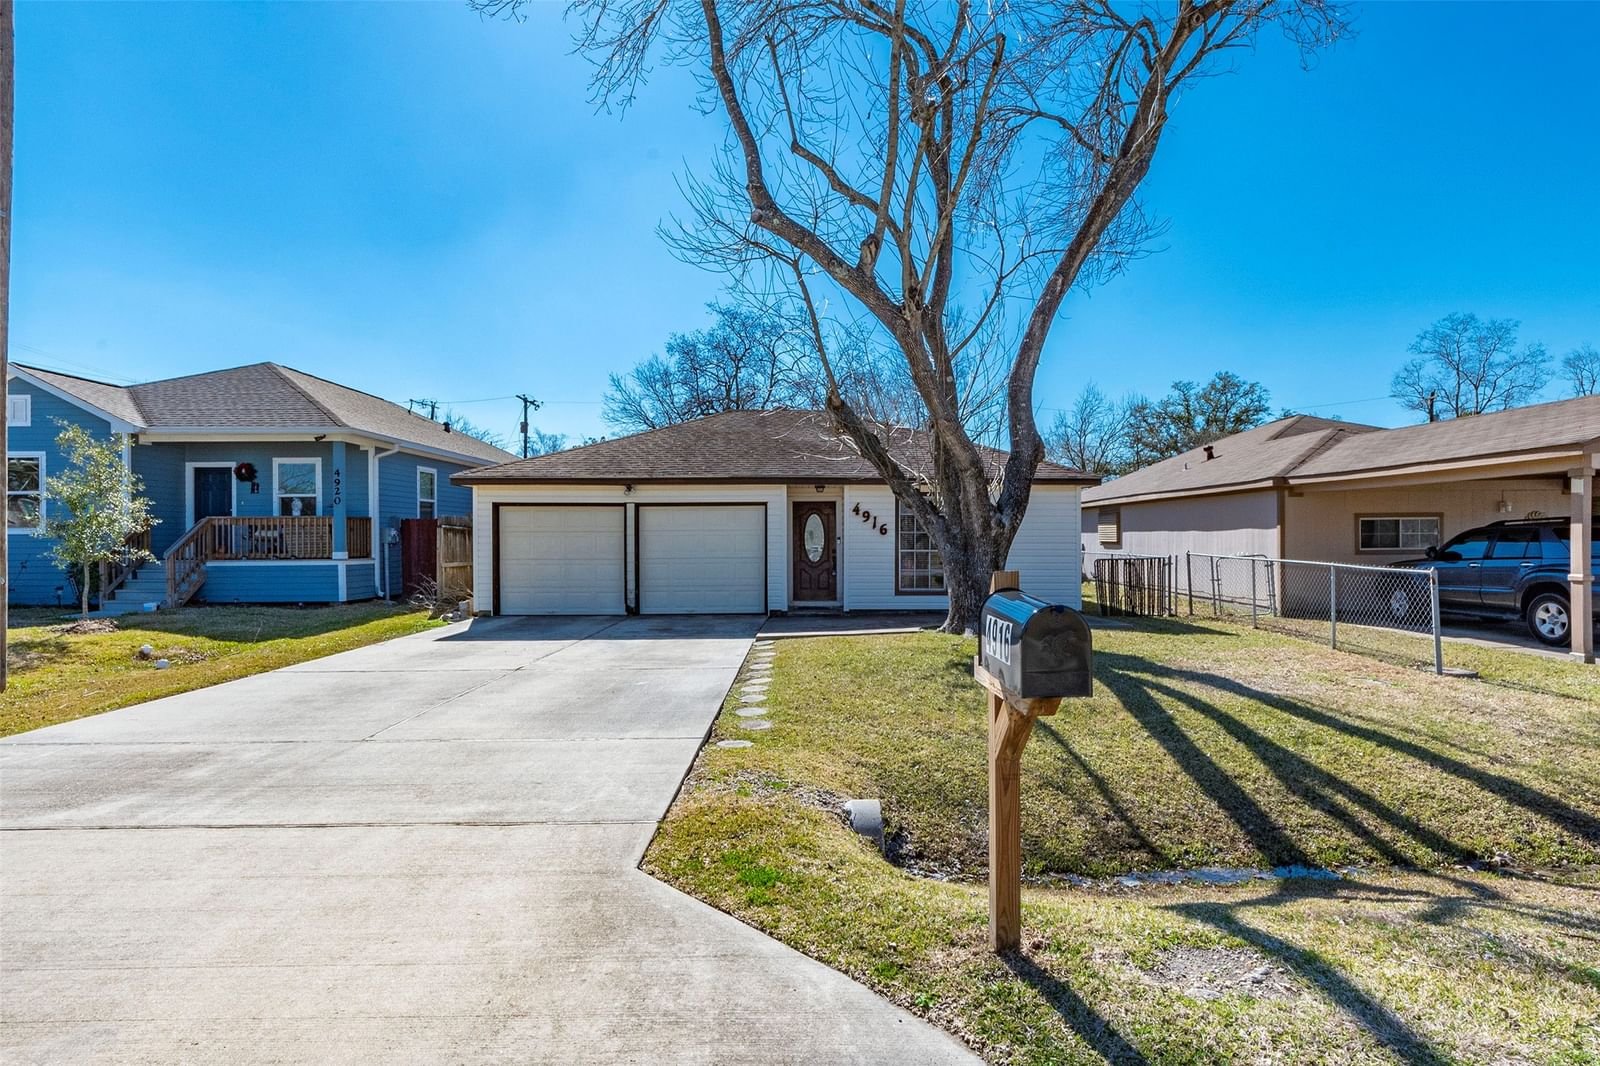 Real estate property located at 4916 26th, Galveston, Nicholstone, Dickinson, TX, US